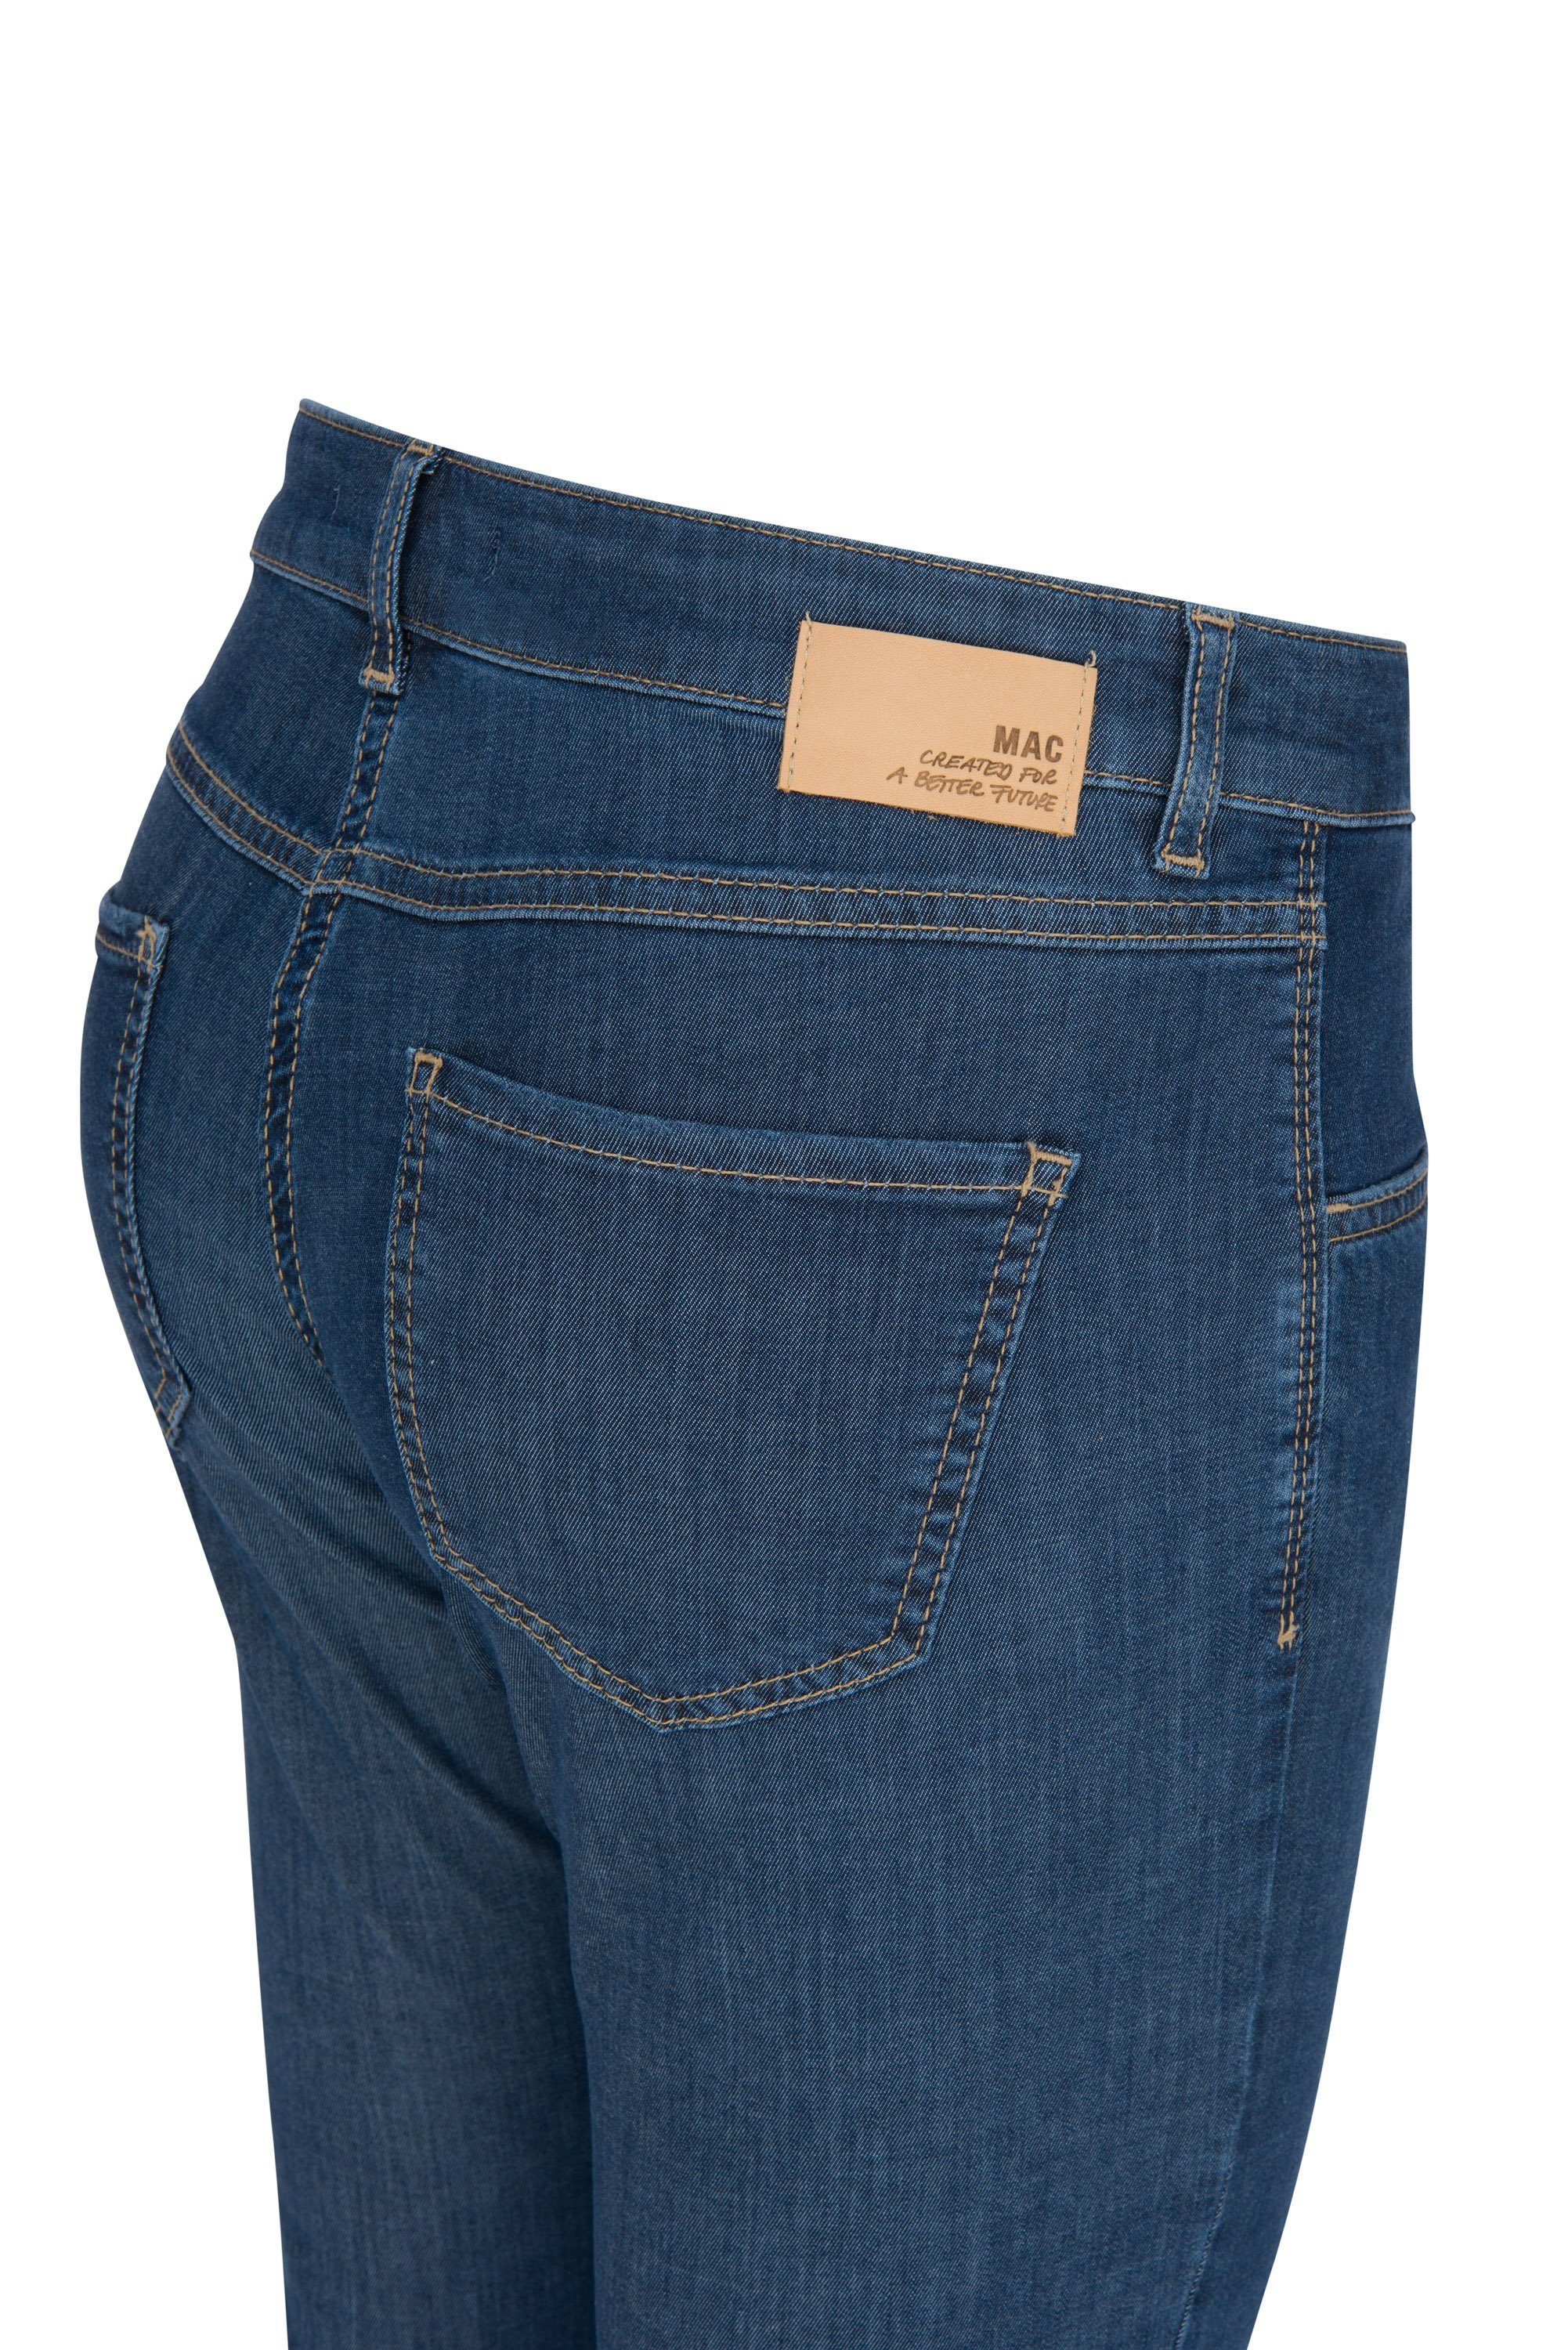 MAC Stretch-Jeans 5917-90-0353 D570 washed used midblue MAC CAPRI